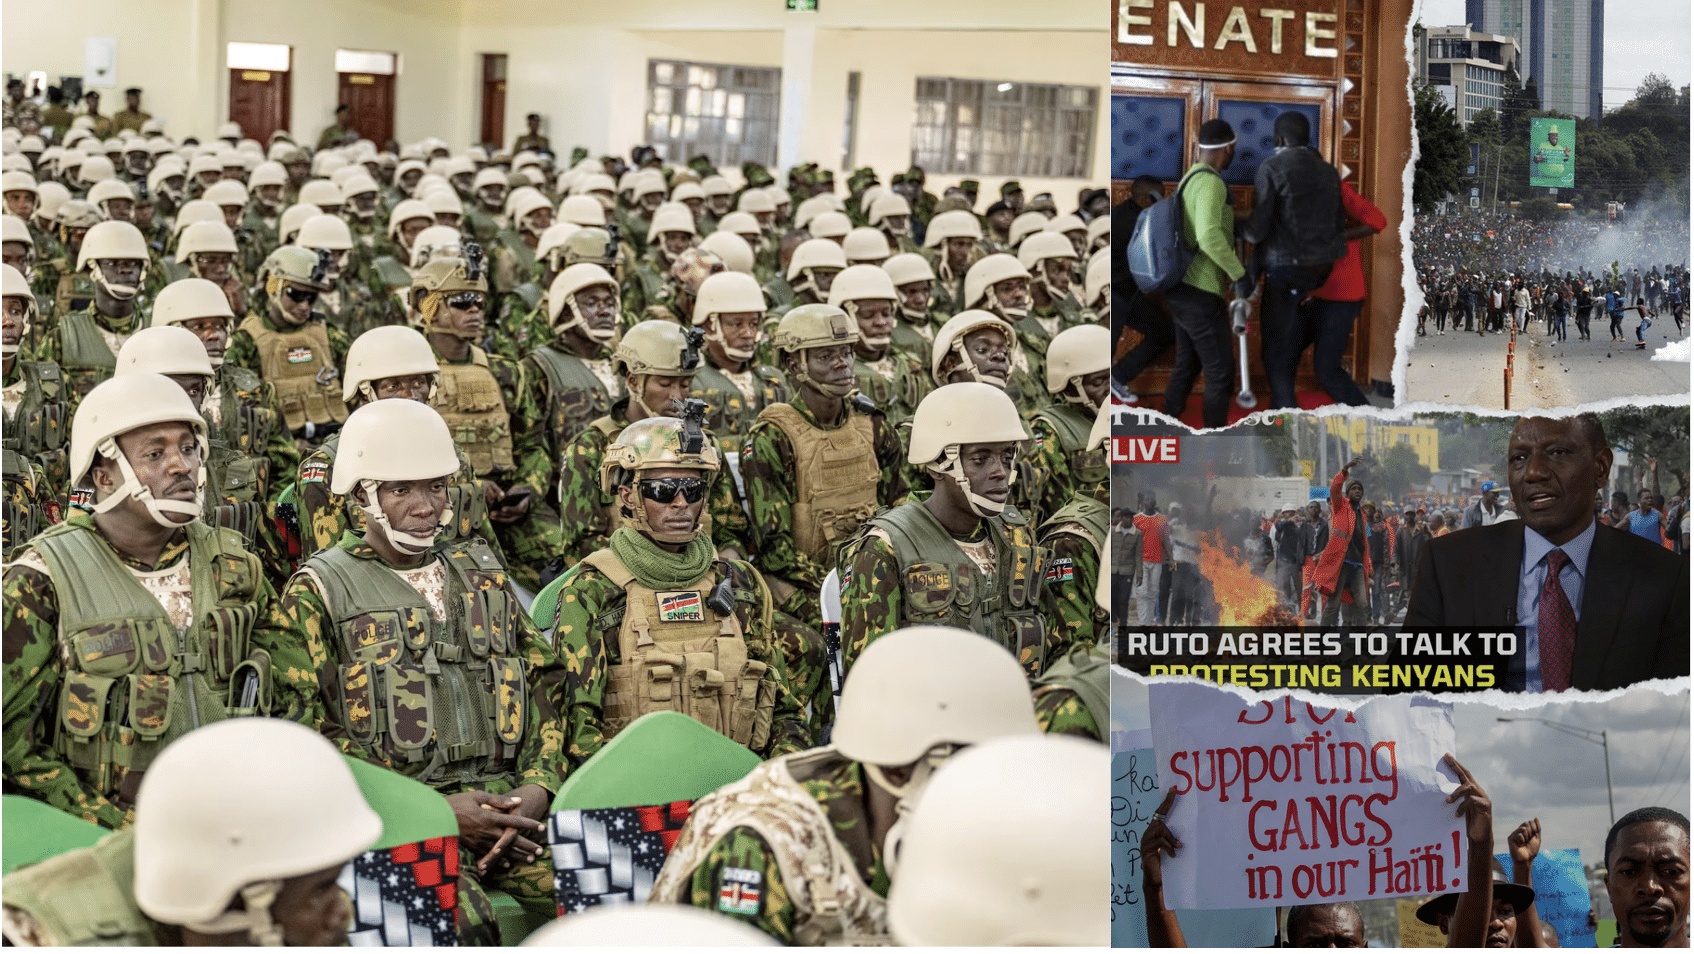 Collage of Kenyan police, riots in Kenya, anti-gang protest in Haiti